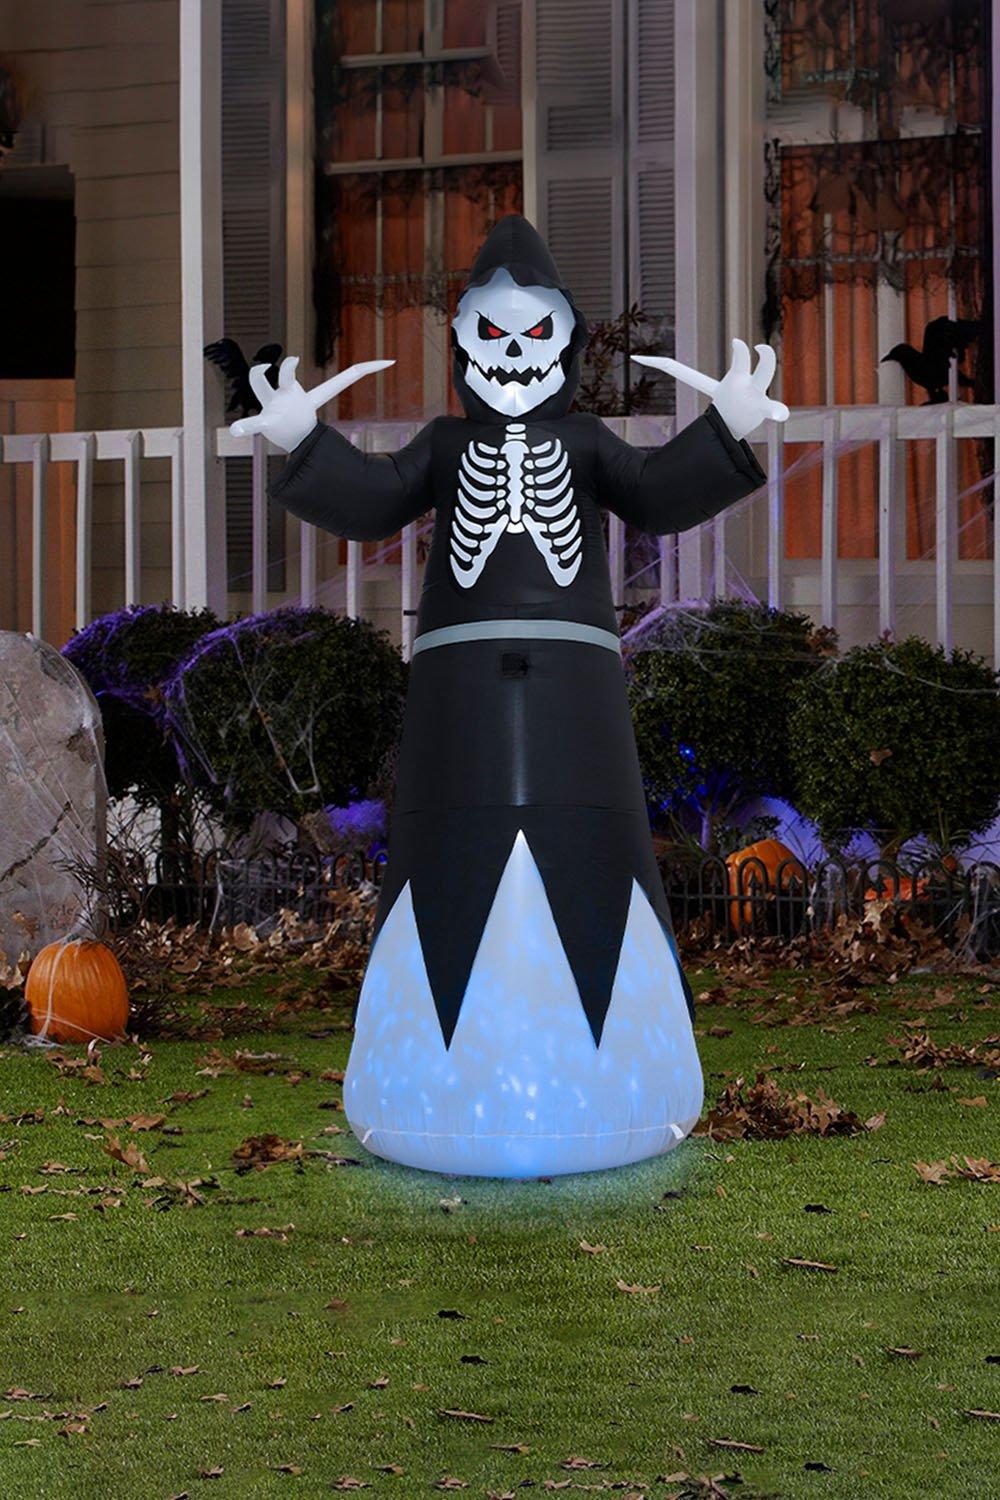 240cm Halloween Outdoor Grim Reaper Inflatable with Blue Lights